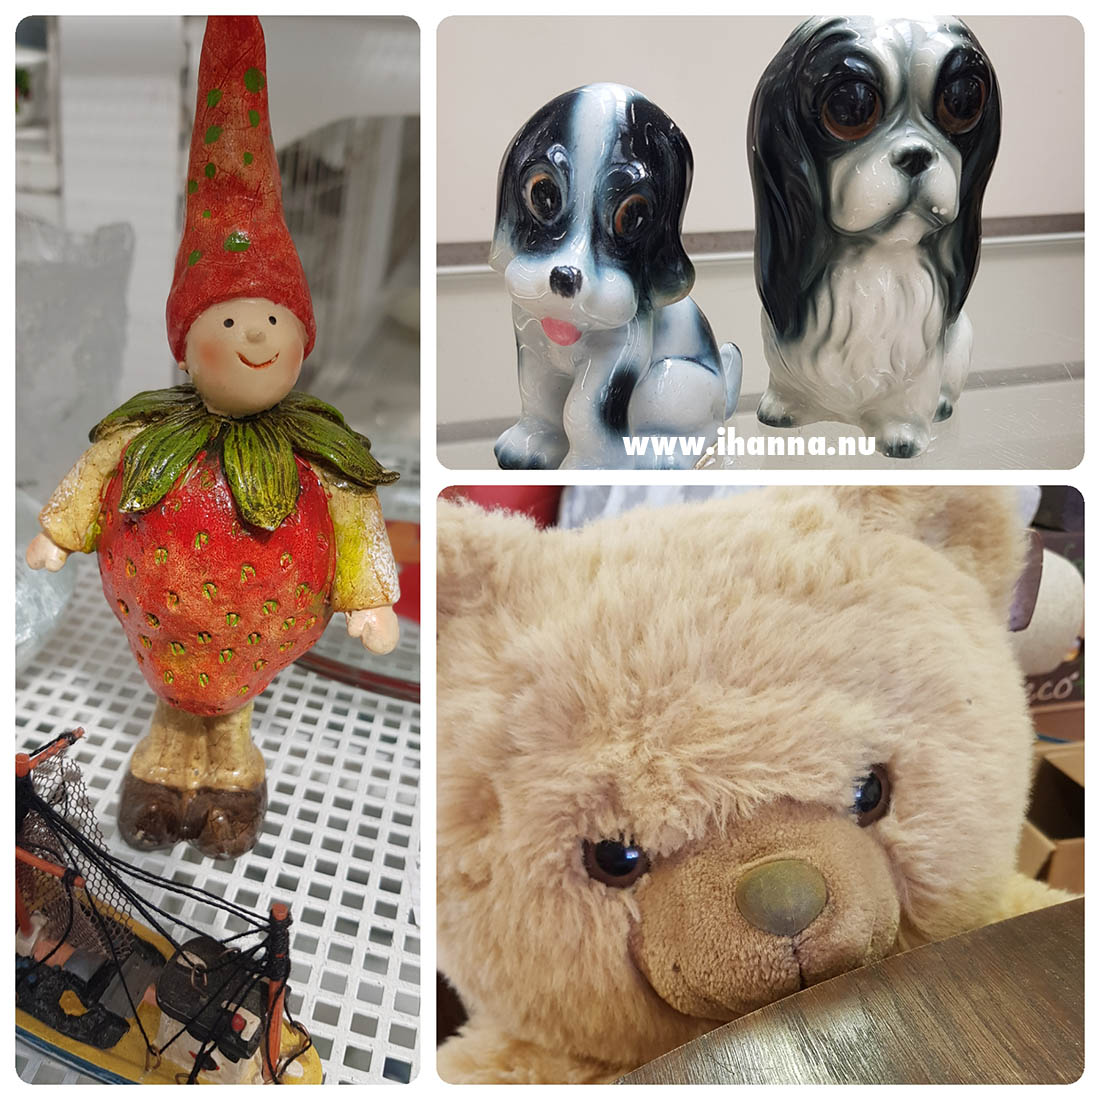 Thrift Shop Inspiration : Strawberry boy, sad ceramic dogs and big teddy bear - Photo copyright Hanna Andersson